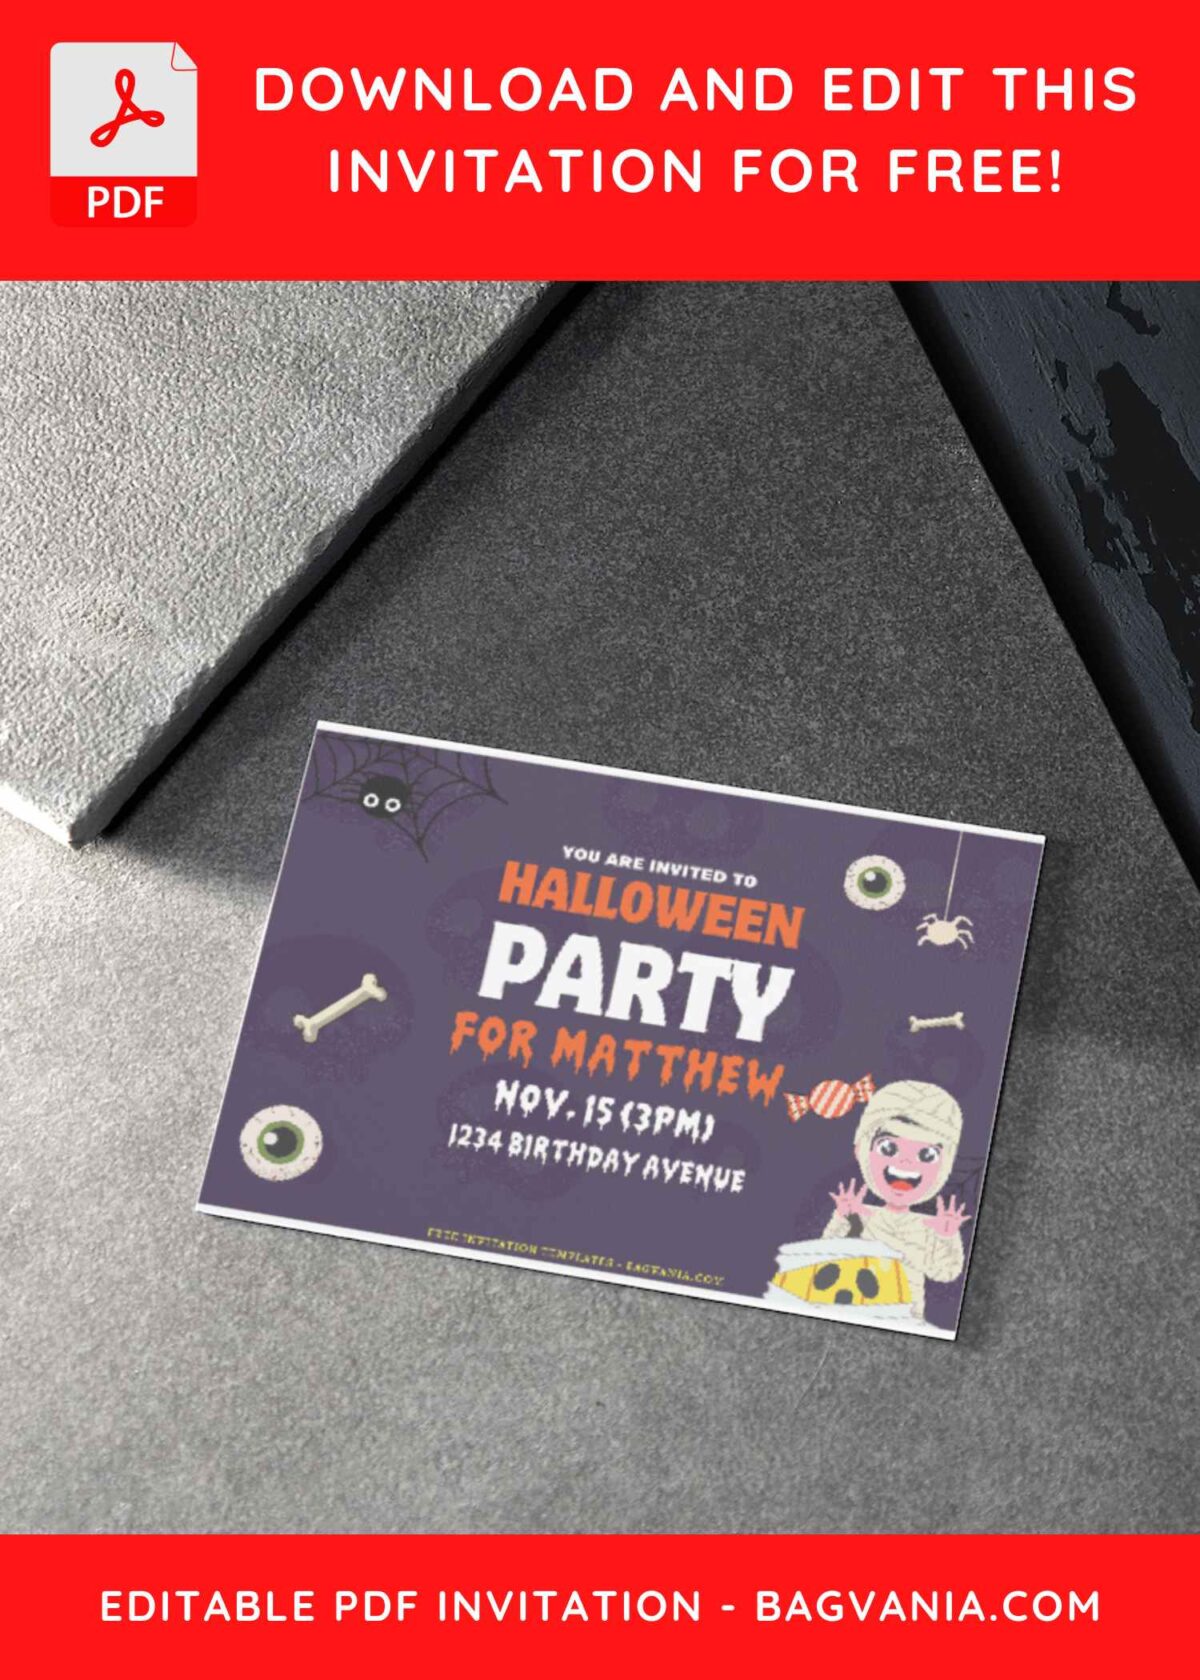 (Free Editable PDF) Party Like Mummy Birthday Invitation Templates H